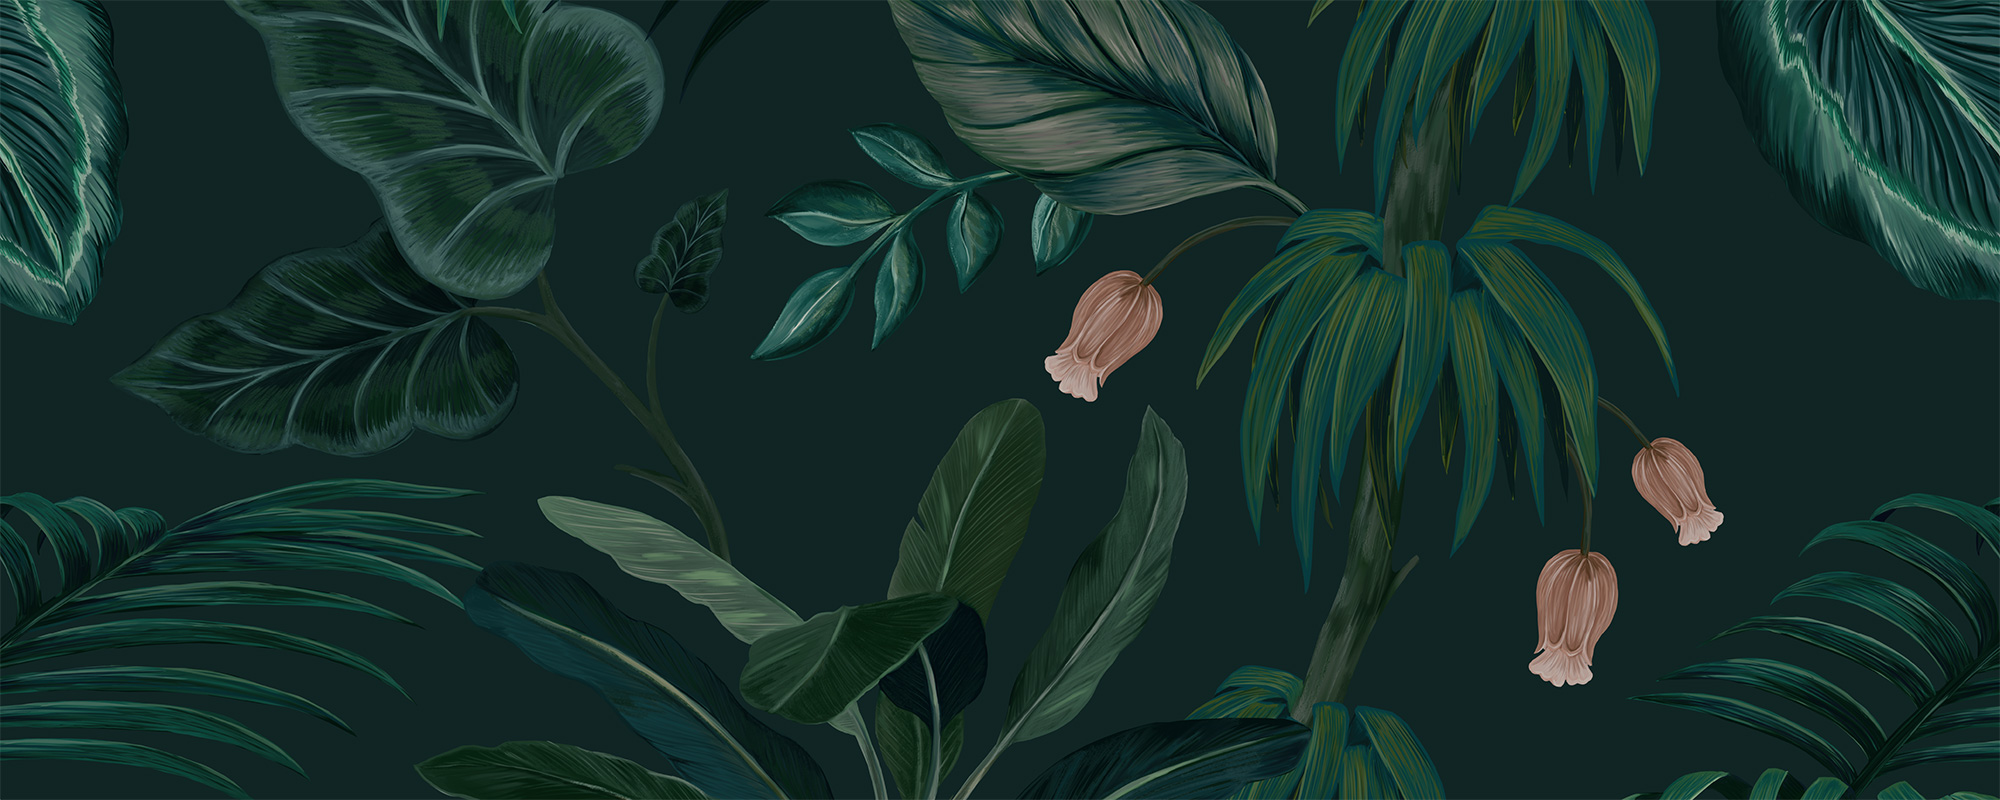 Lush Tropical Jungle Leaves – Dark Green